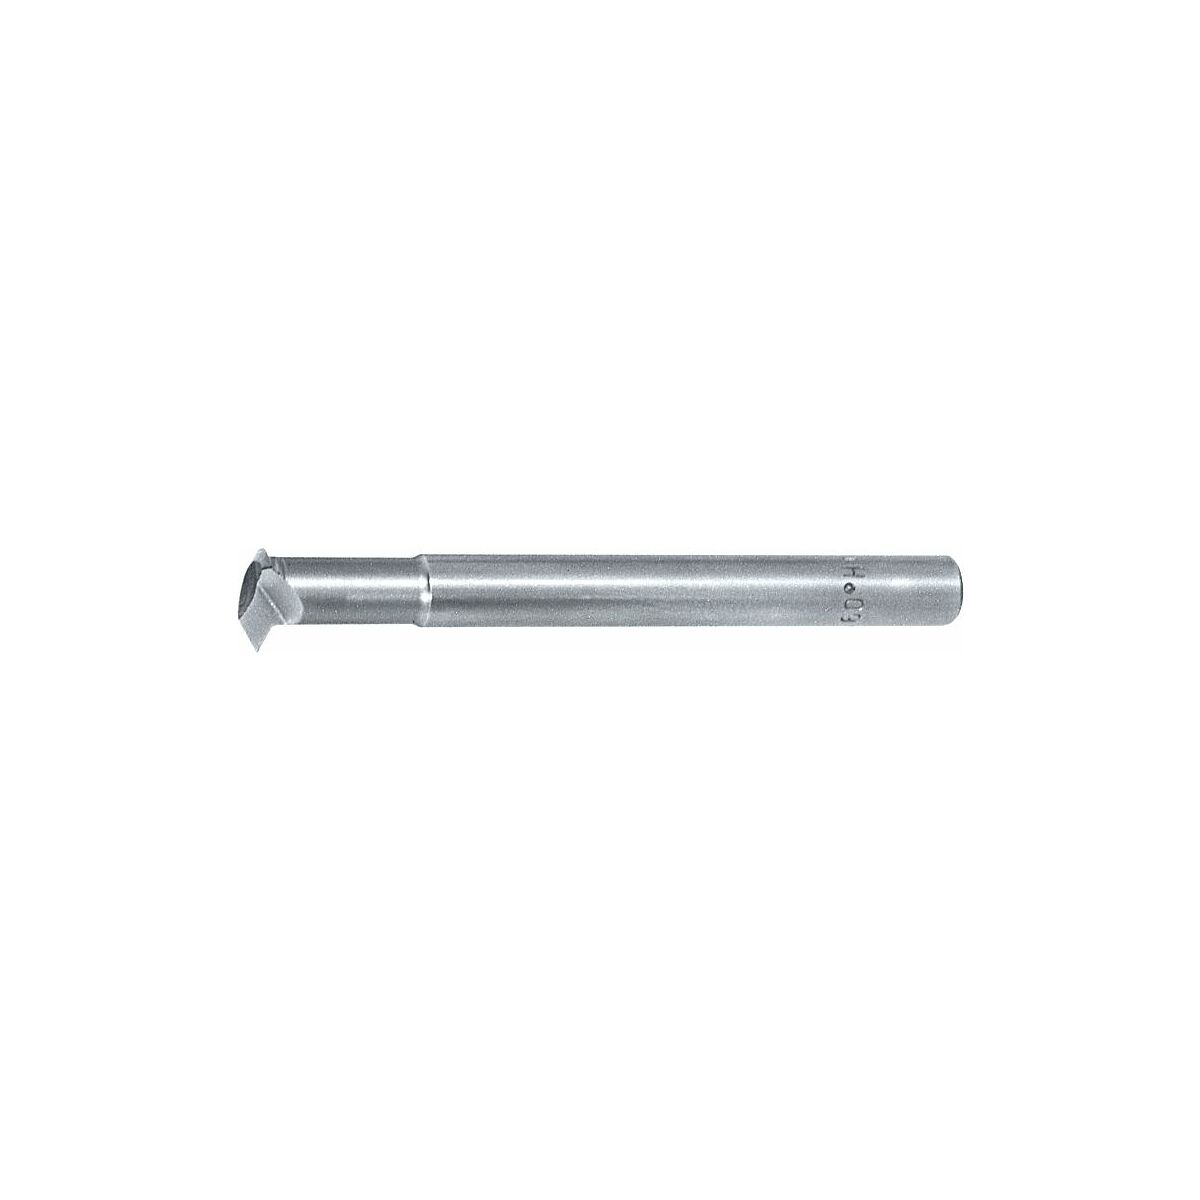 Korloy 1-06-006118 PTFNL 16mm Diameter Boring Bar Steel Shank Left Hand